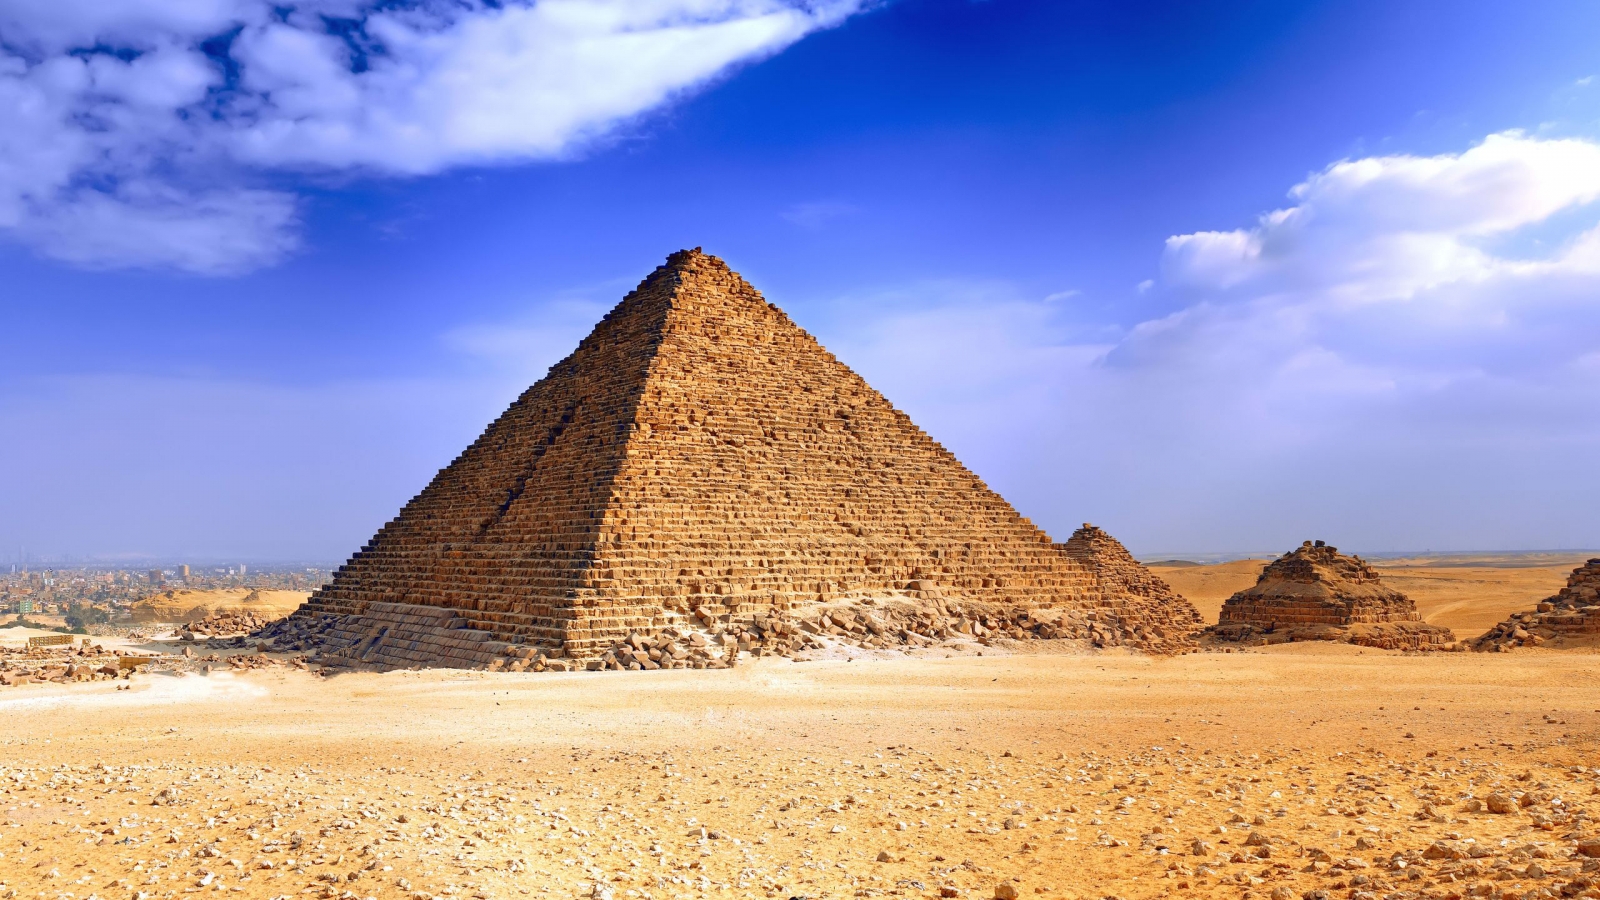 HD Wallpaper Widescreen Pyramids